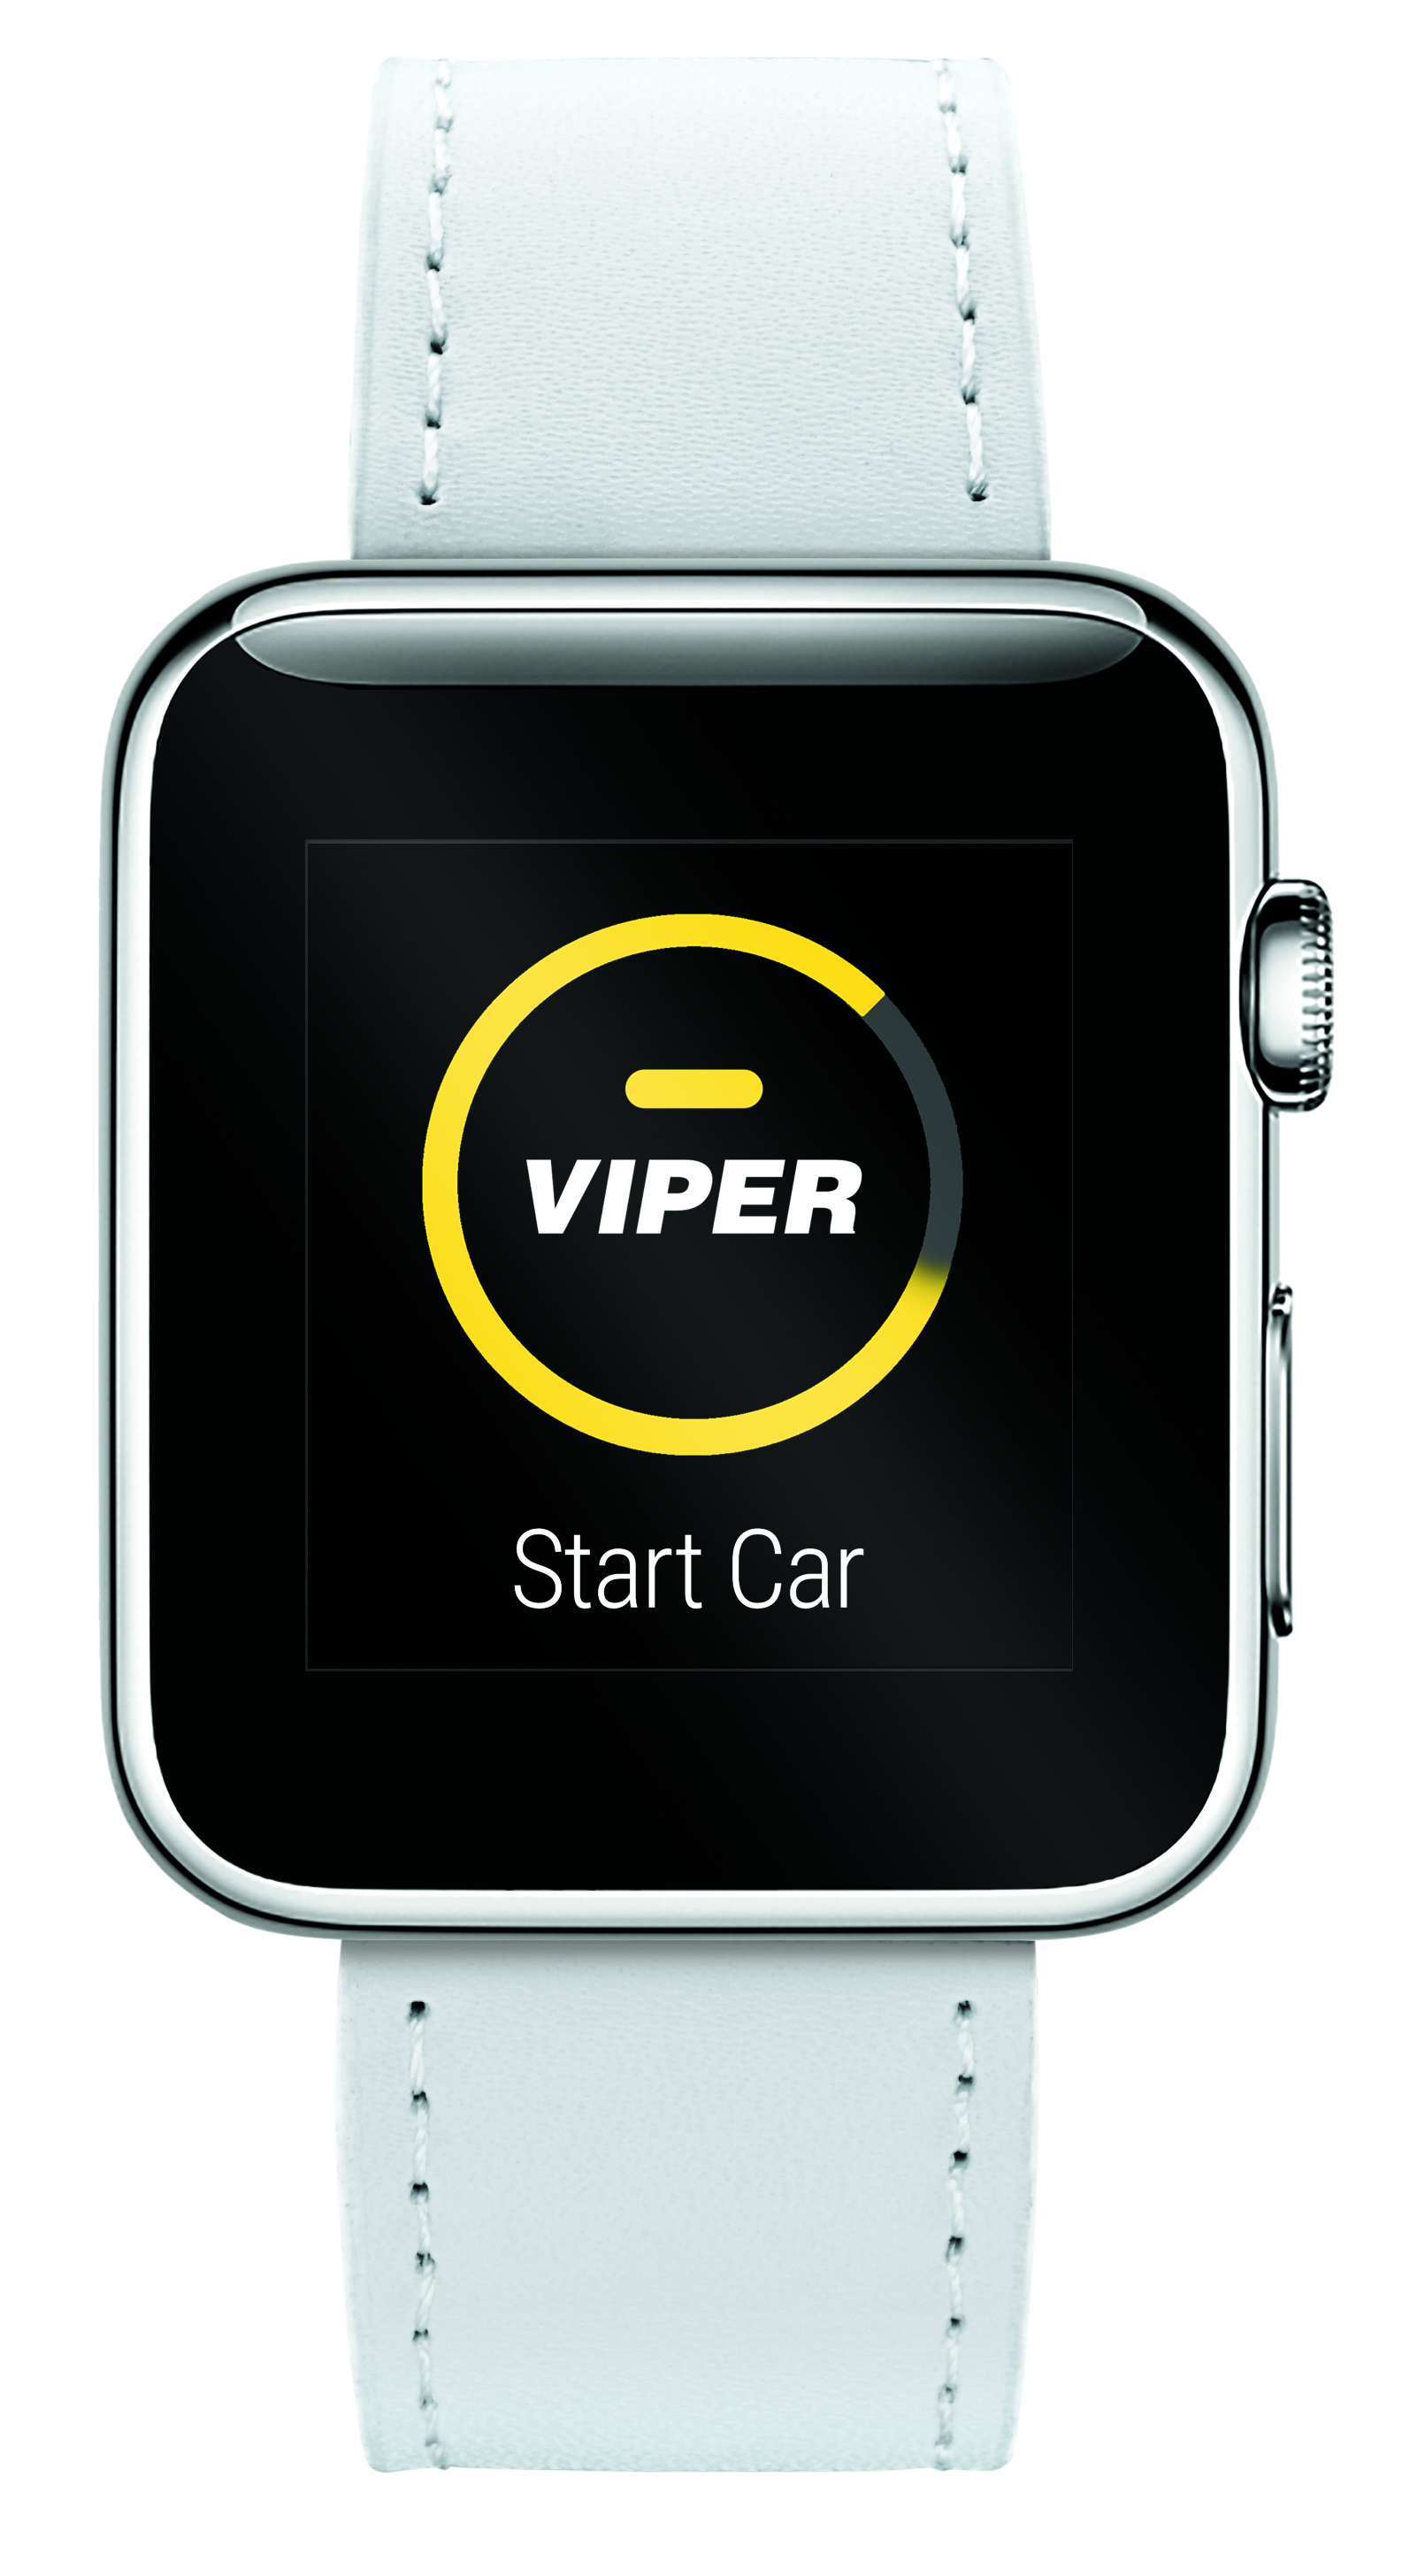 viper smartstart app based remote start system apple watch